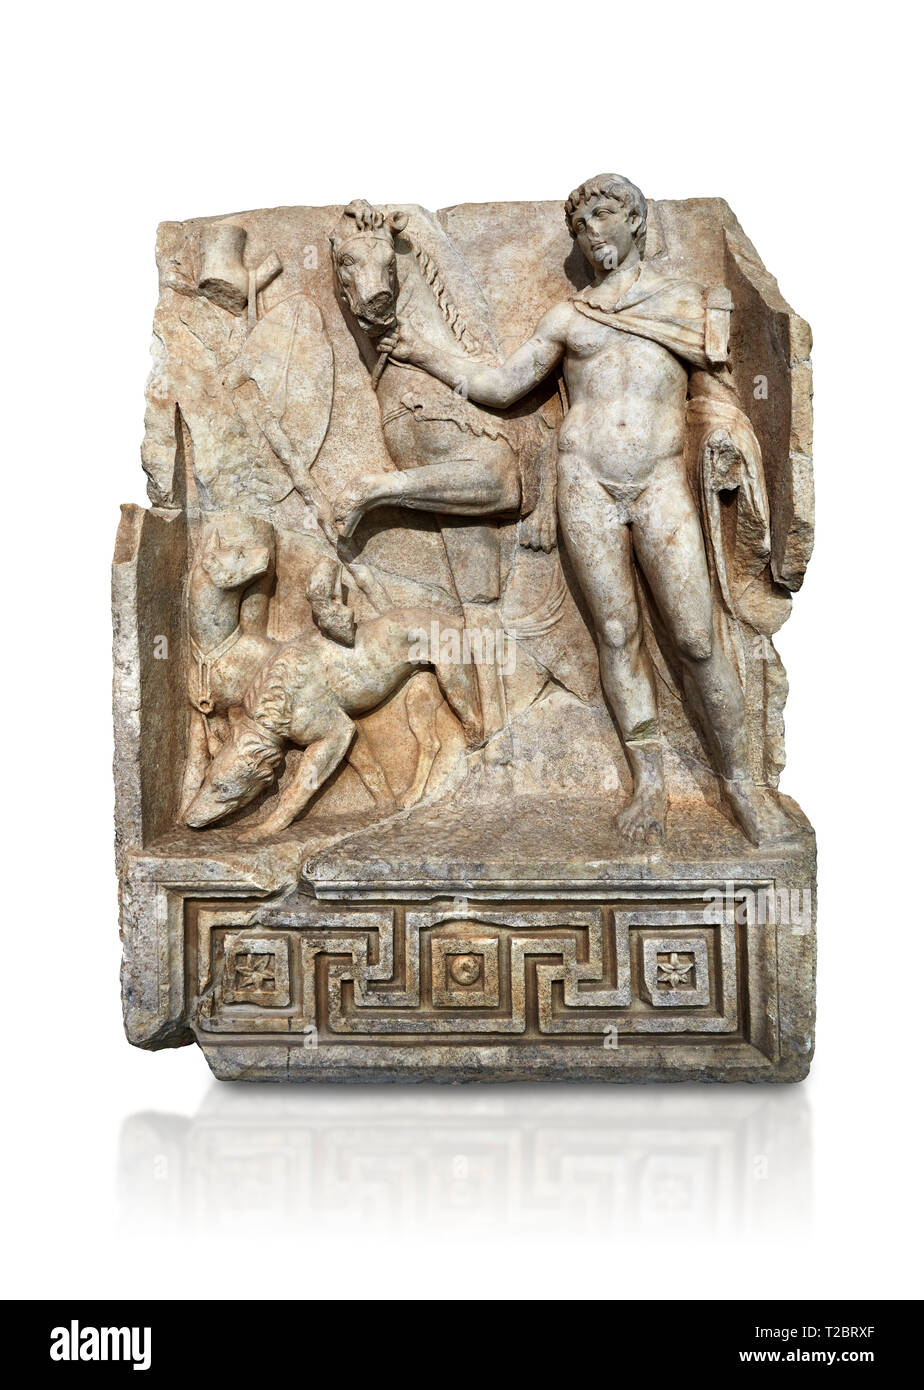 Roman Sebasteion relief  sculpture of Royal Hero with hunting dogs,  Aphrodisias Museum, Aphrodisias, Turkey.     Against a white background.  A diade Stock Photo